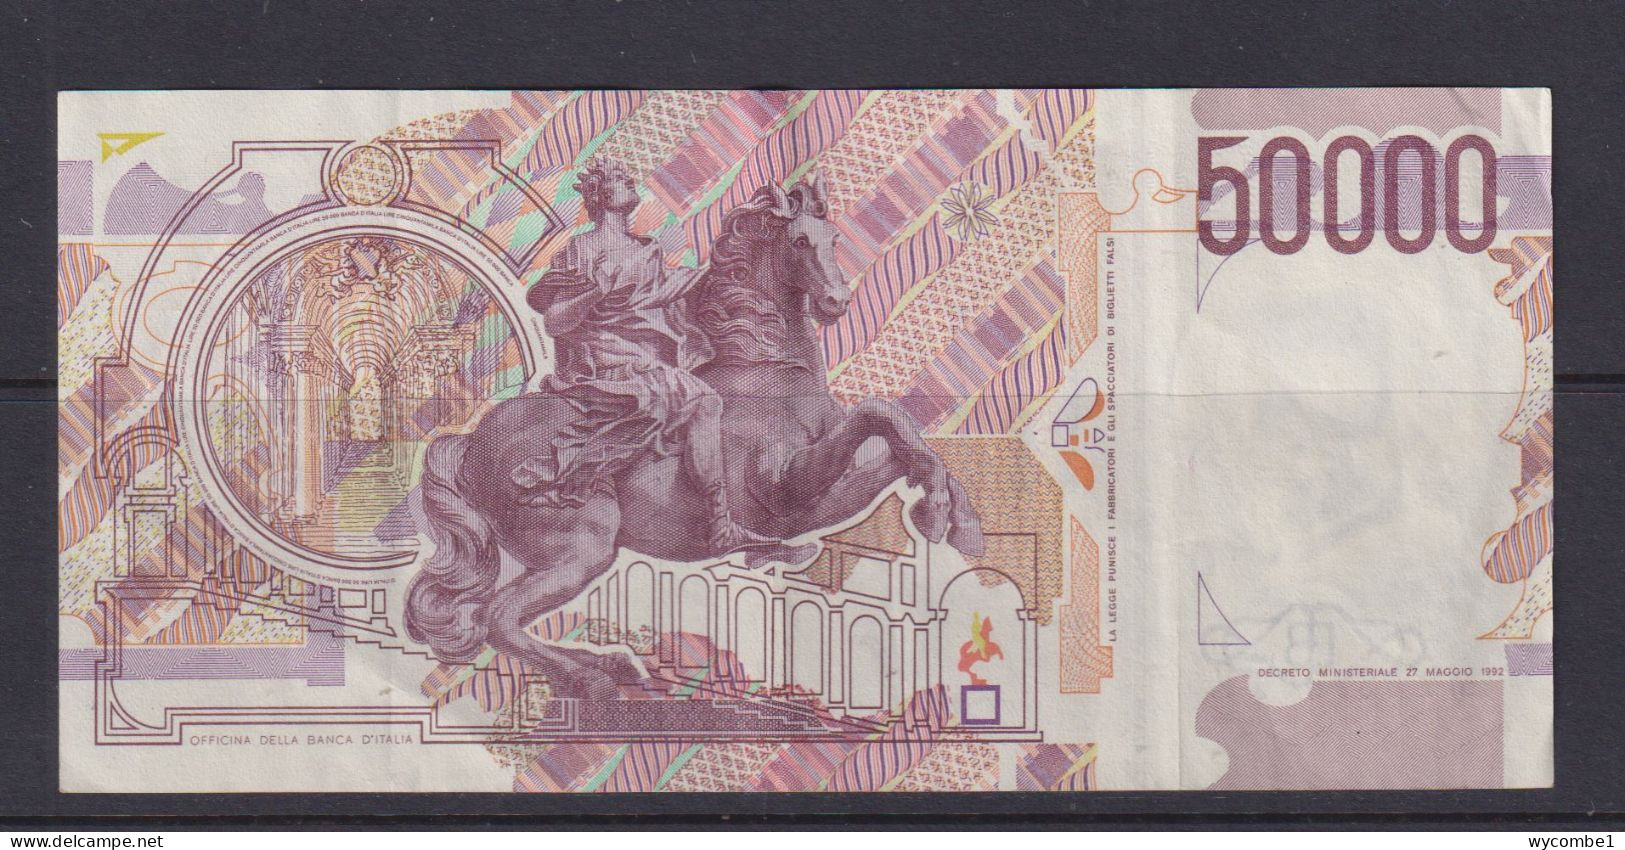 ITALY- 1992 50000 Lira Circulated Banknote As Scans - 50000 Liras